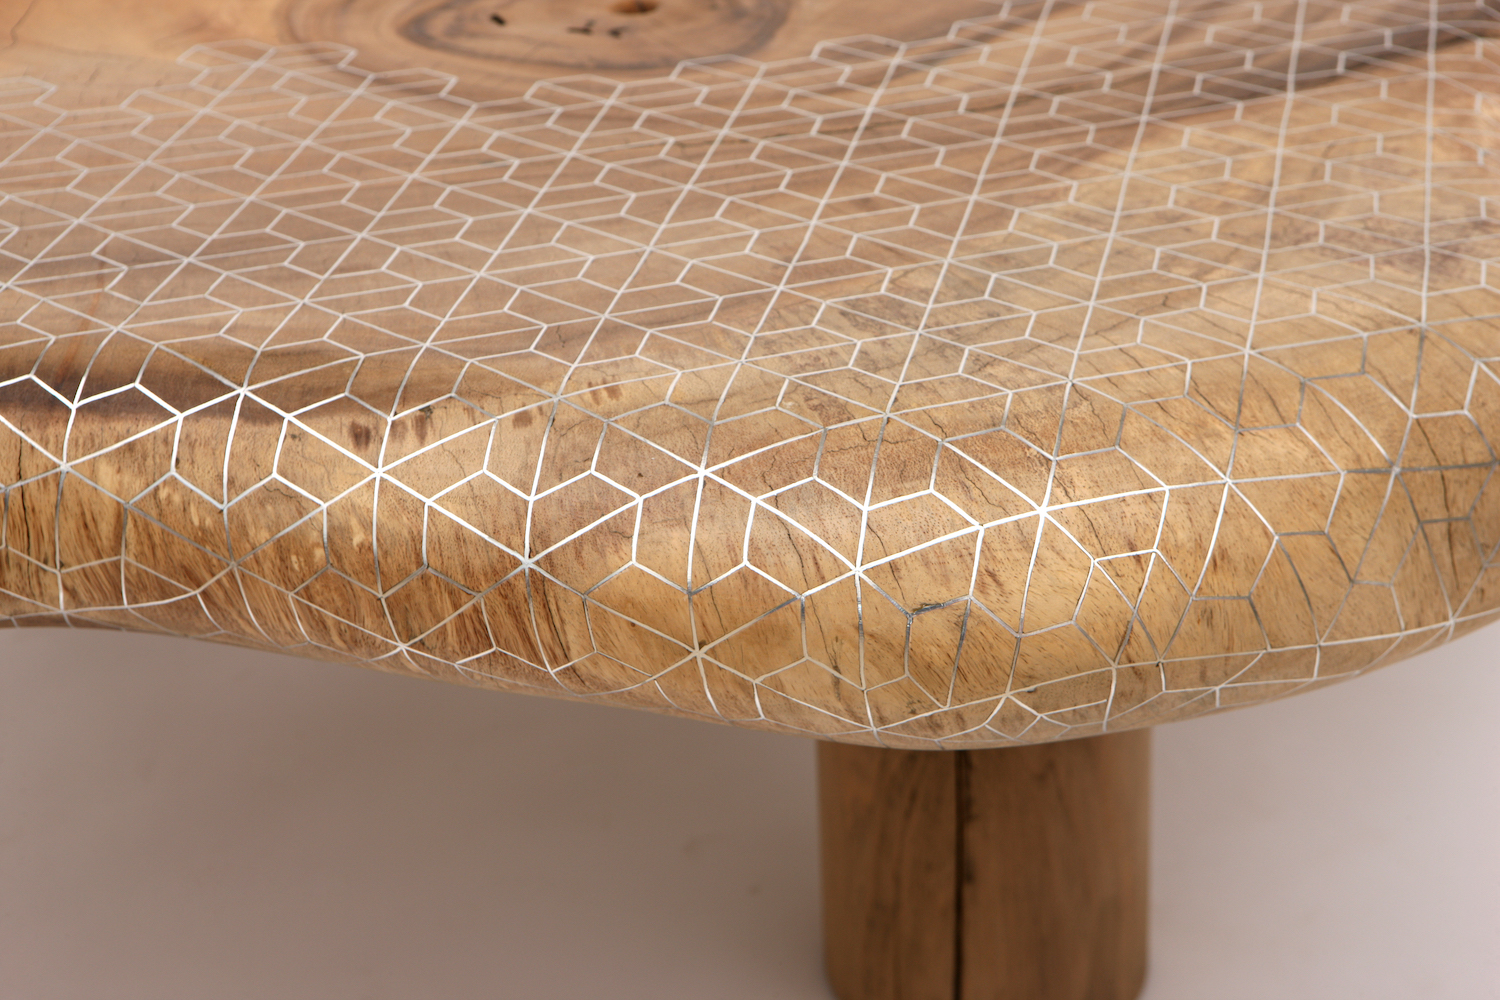 Organic + geometric coffee table by Nada Debs | Flodeau.com